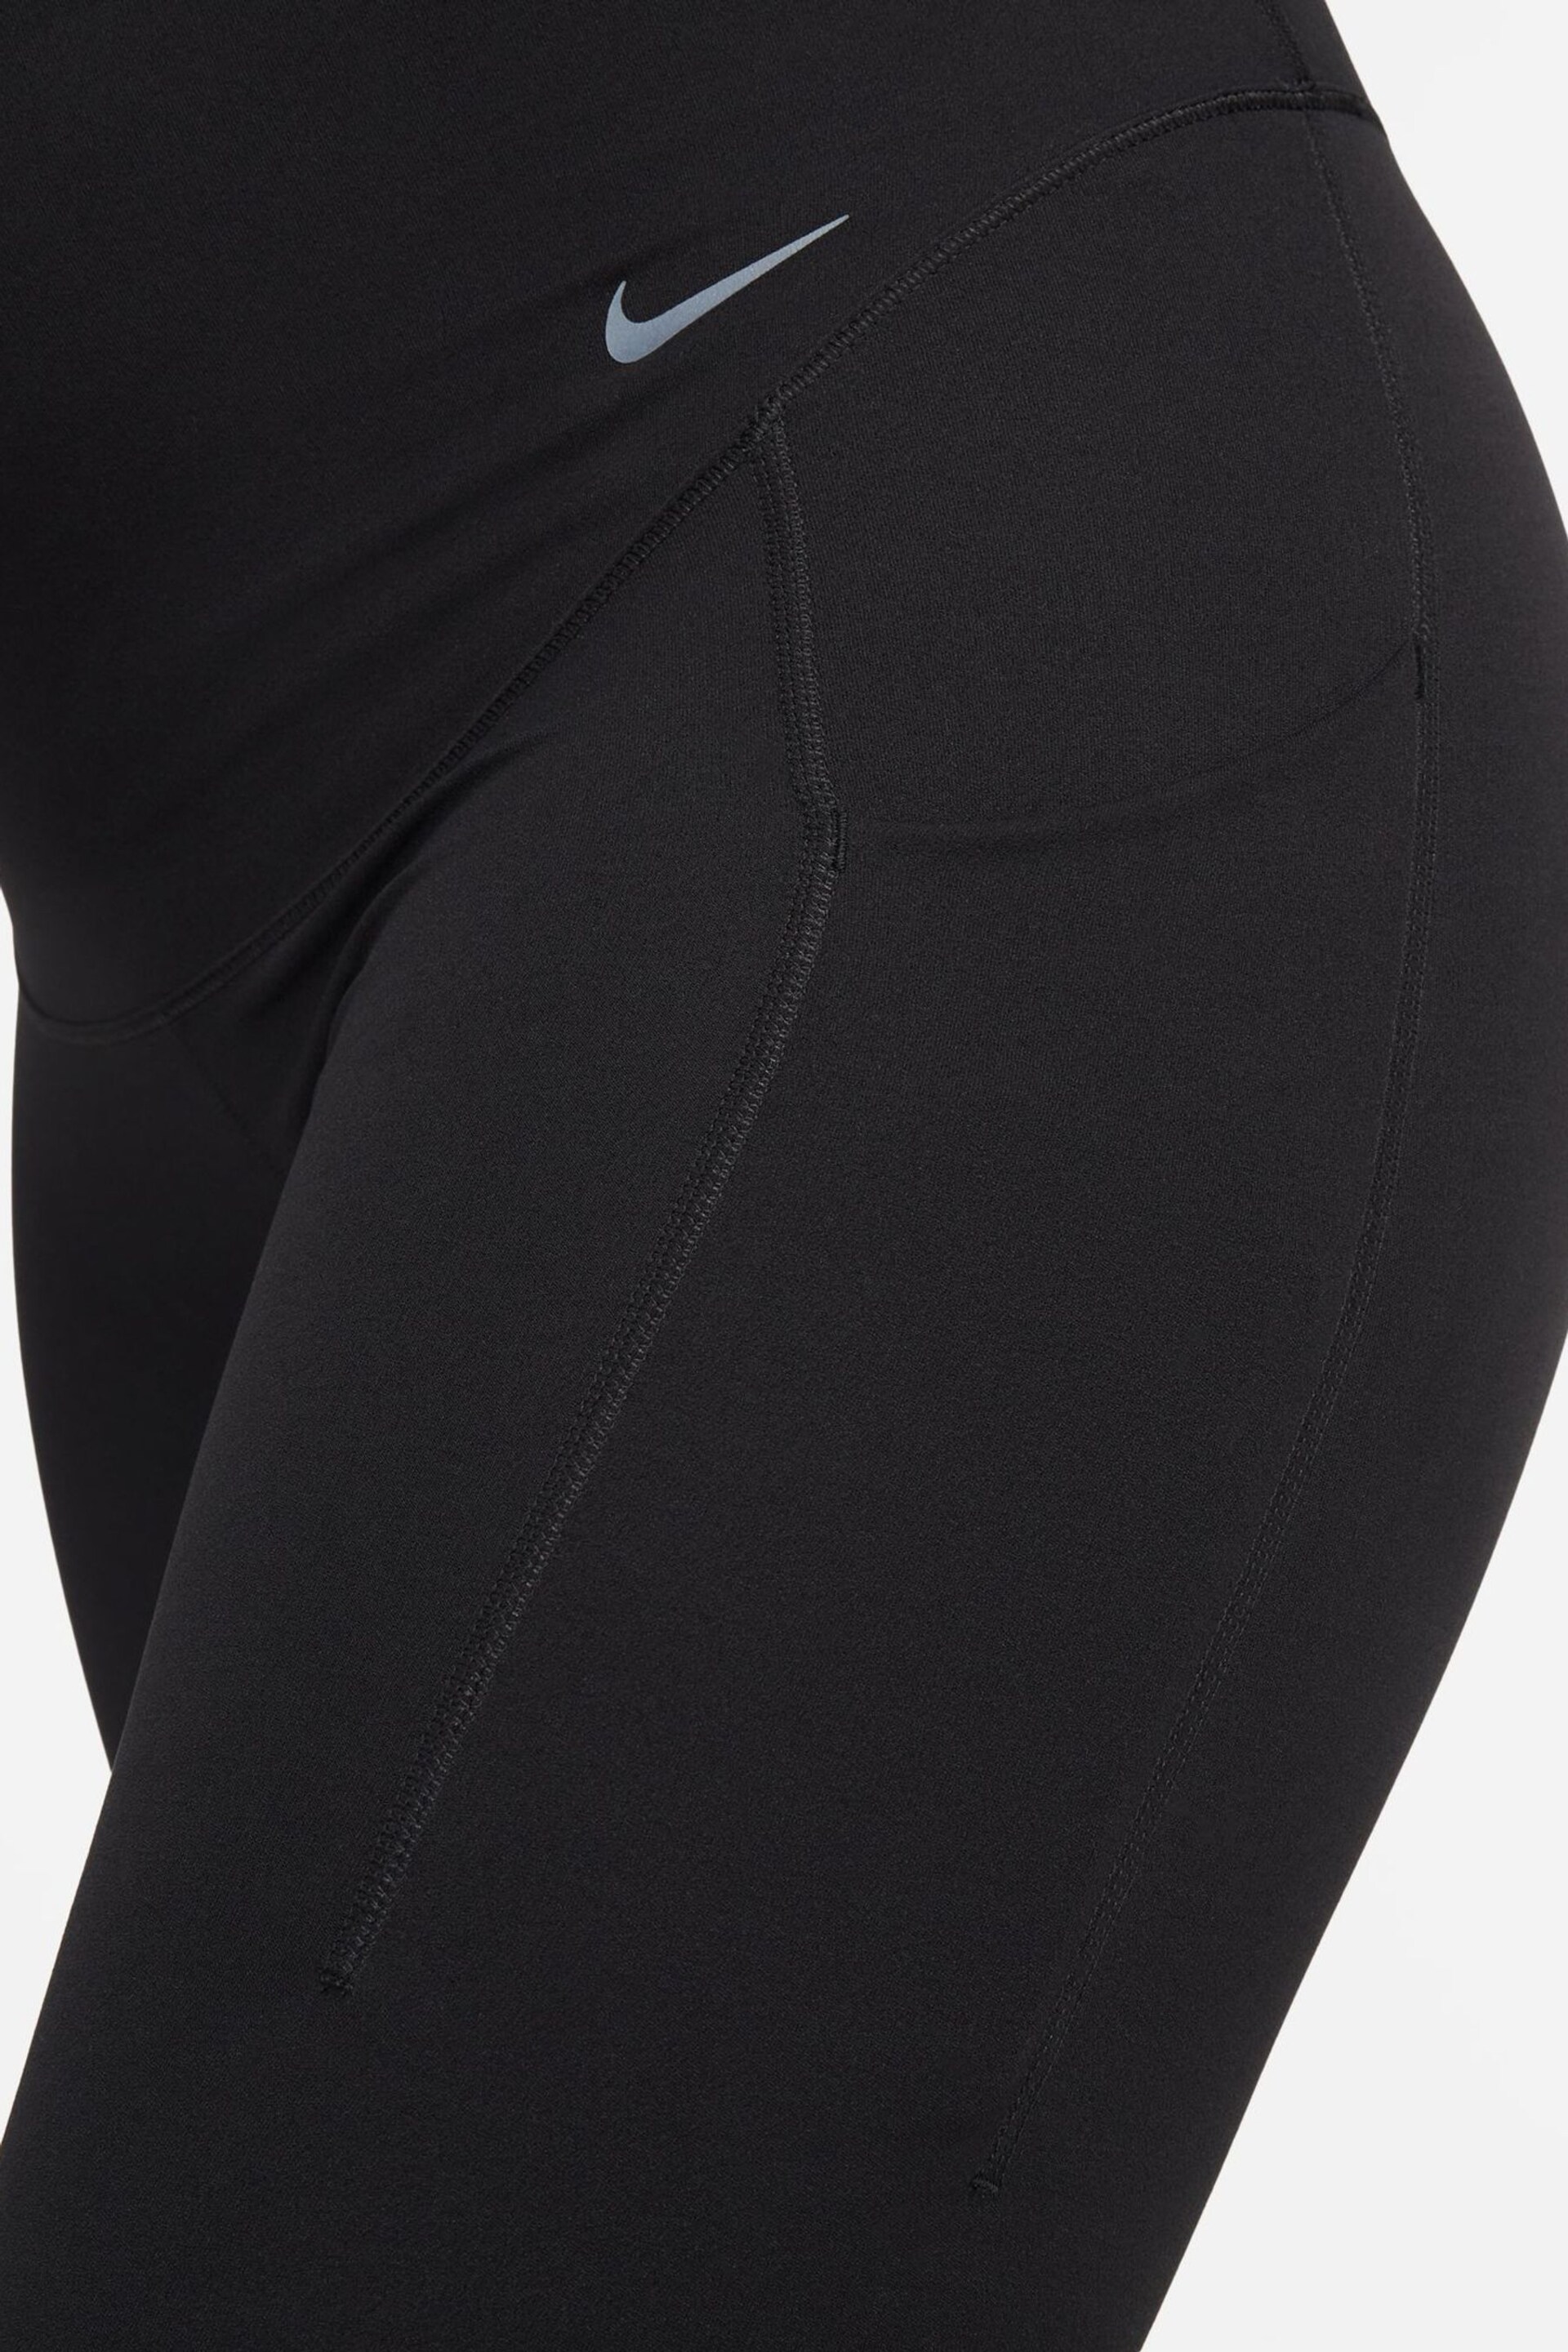 Nike Black Maternity Zenvy High Waisted 7/8 Leggings with Pockets - Image 9 of 9